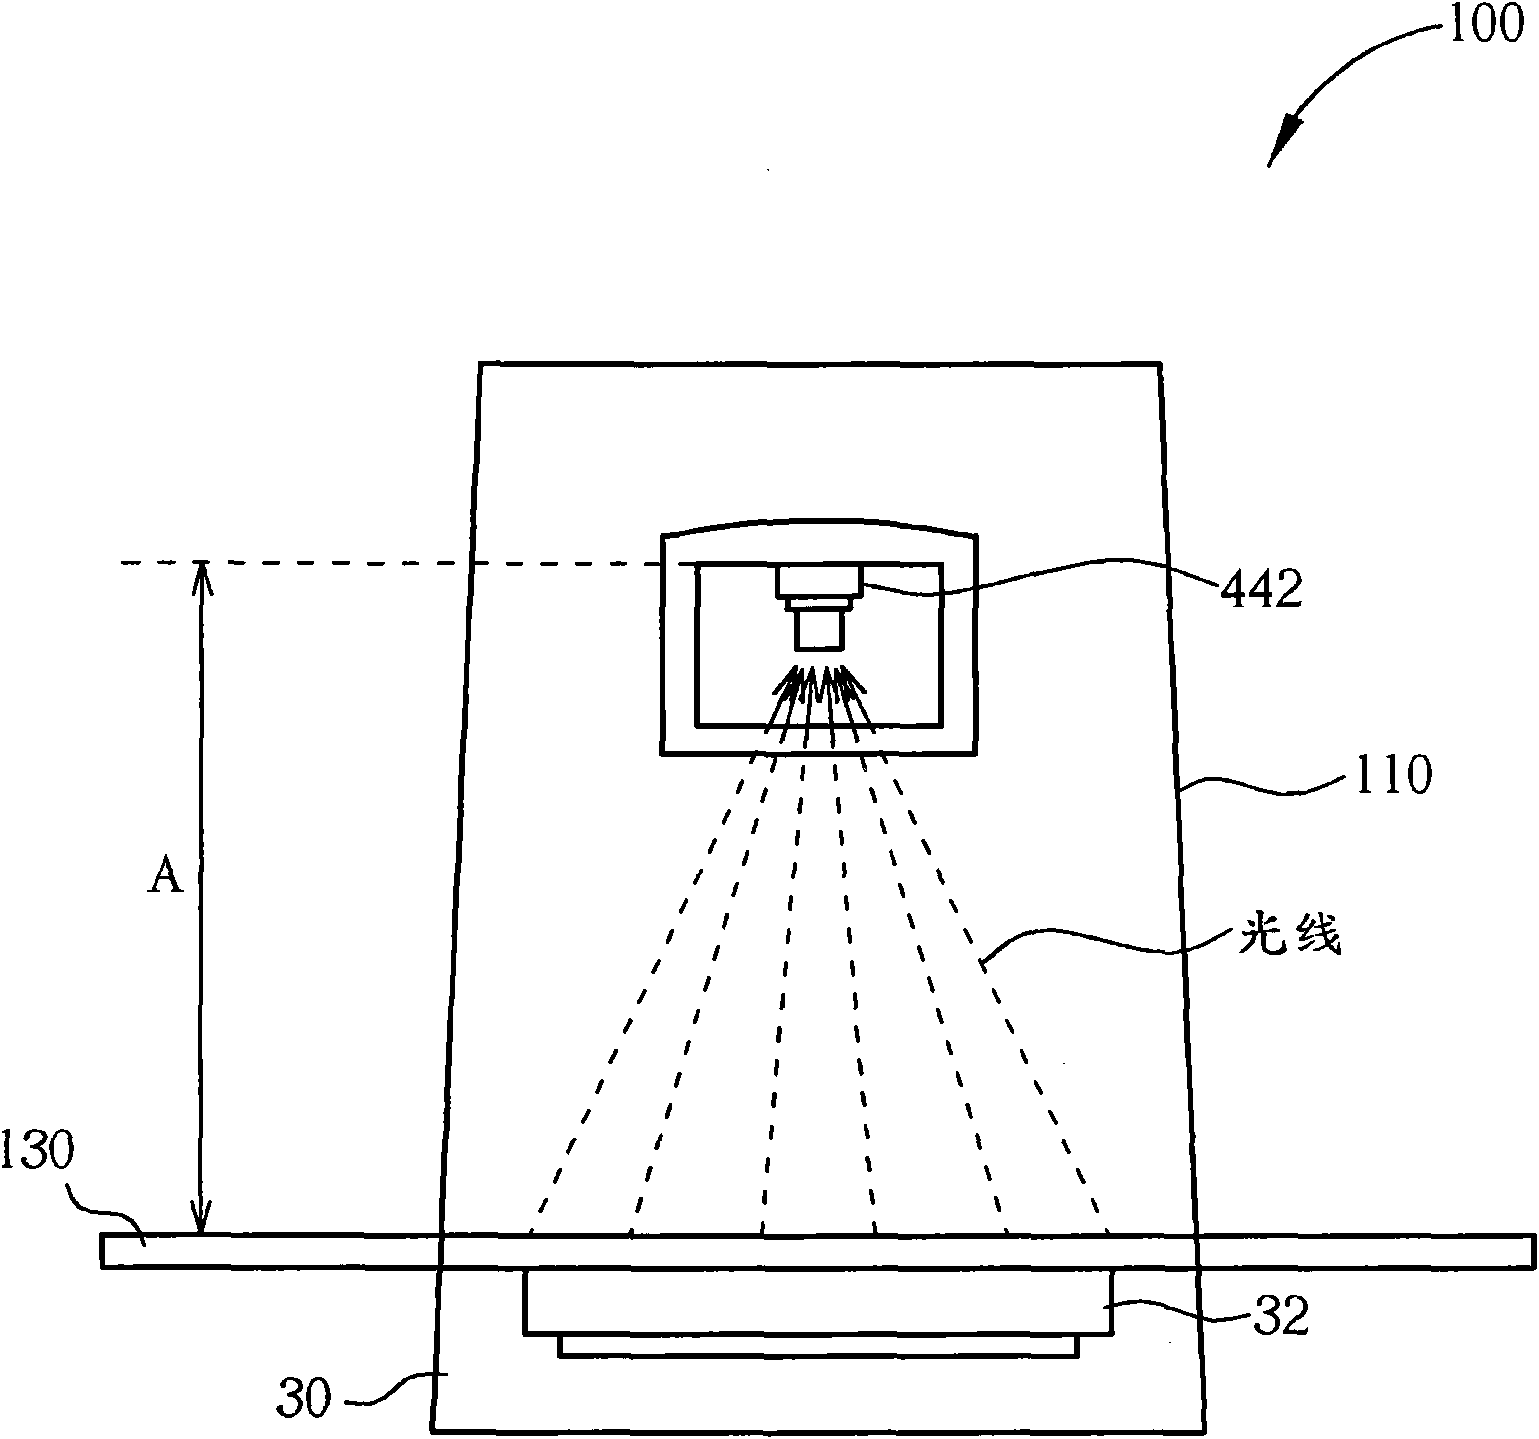 Film scanning device